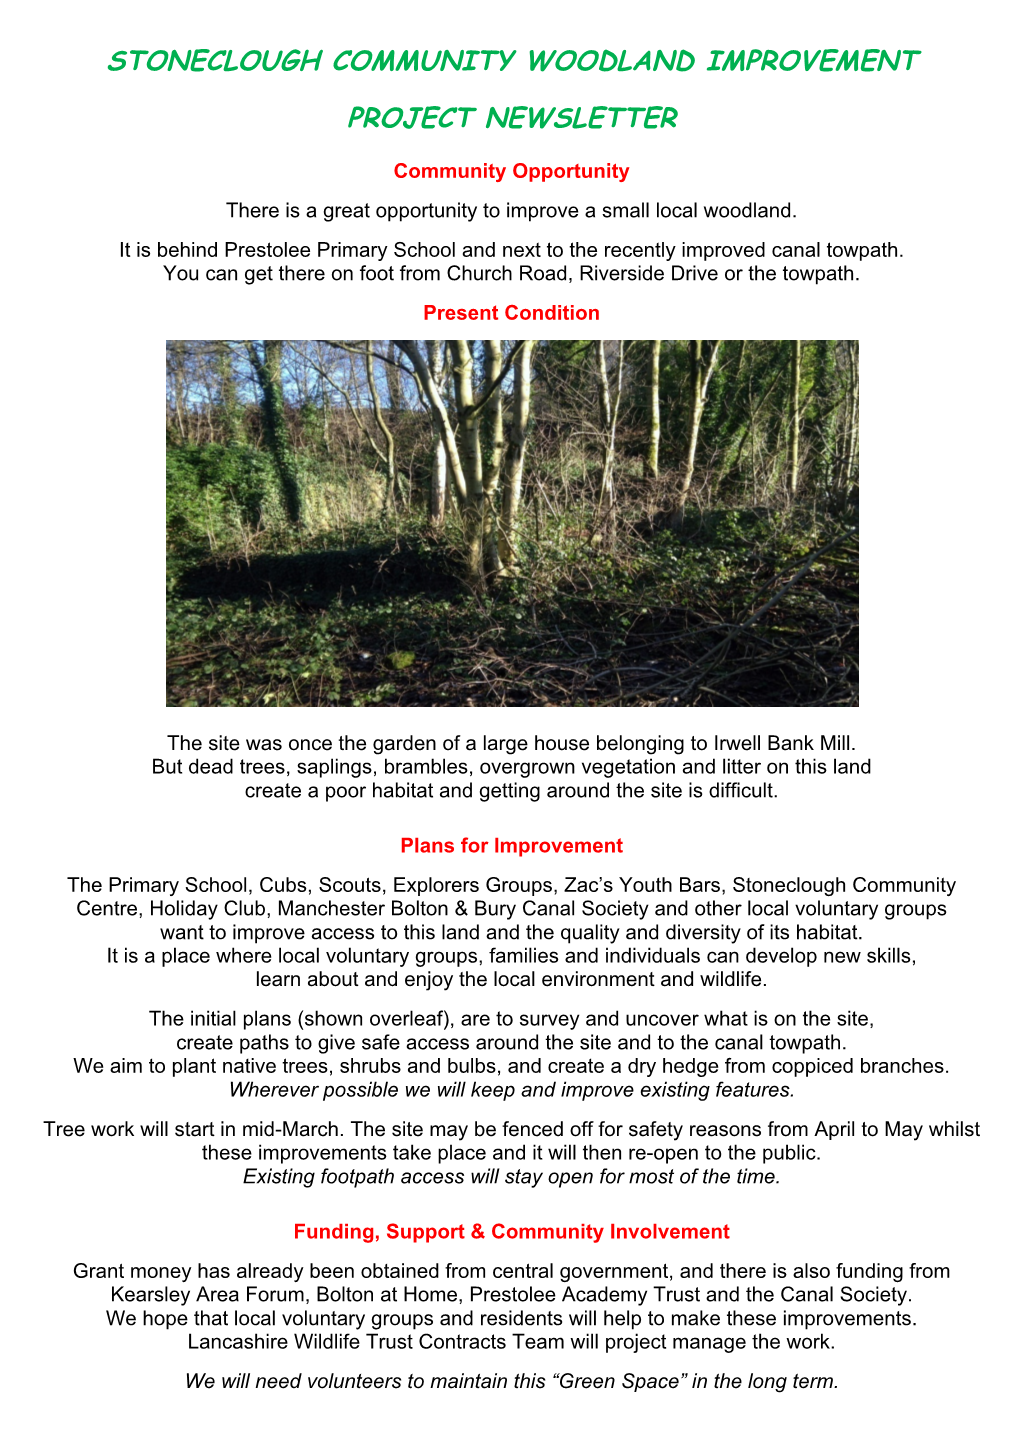 Stoneclough Community Woodland Improvement Project Newsletter